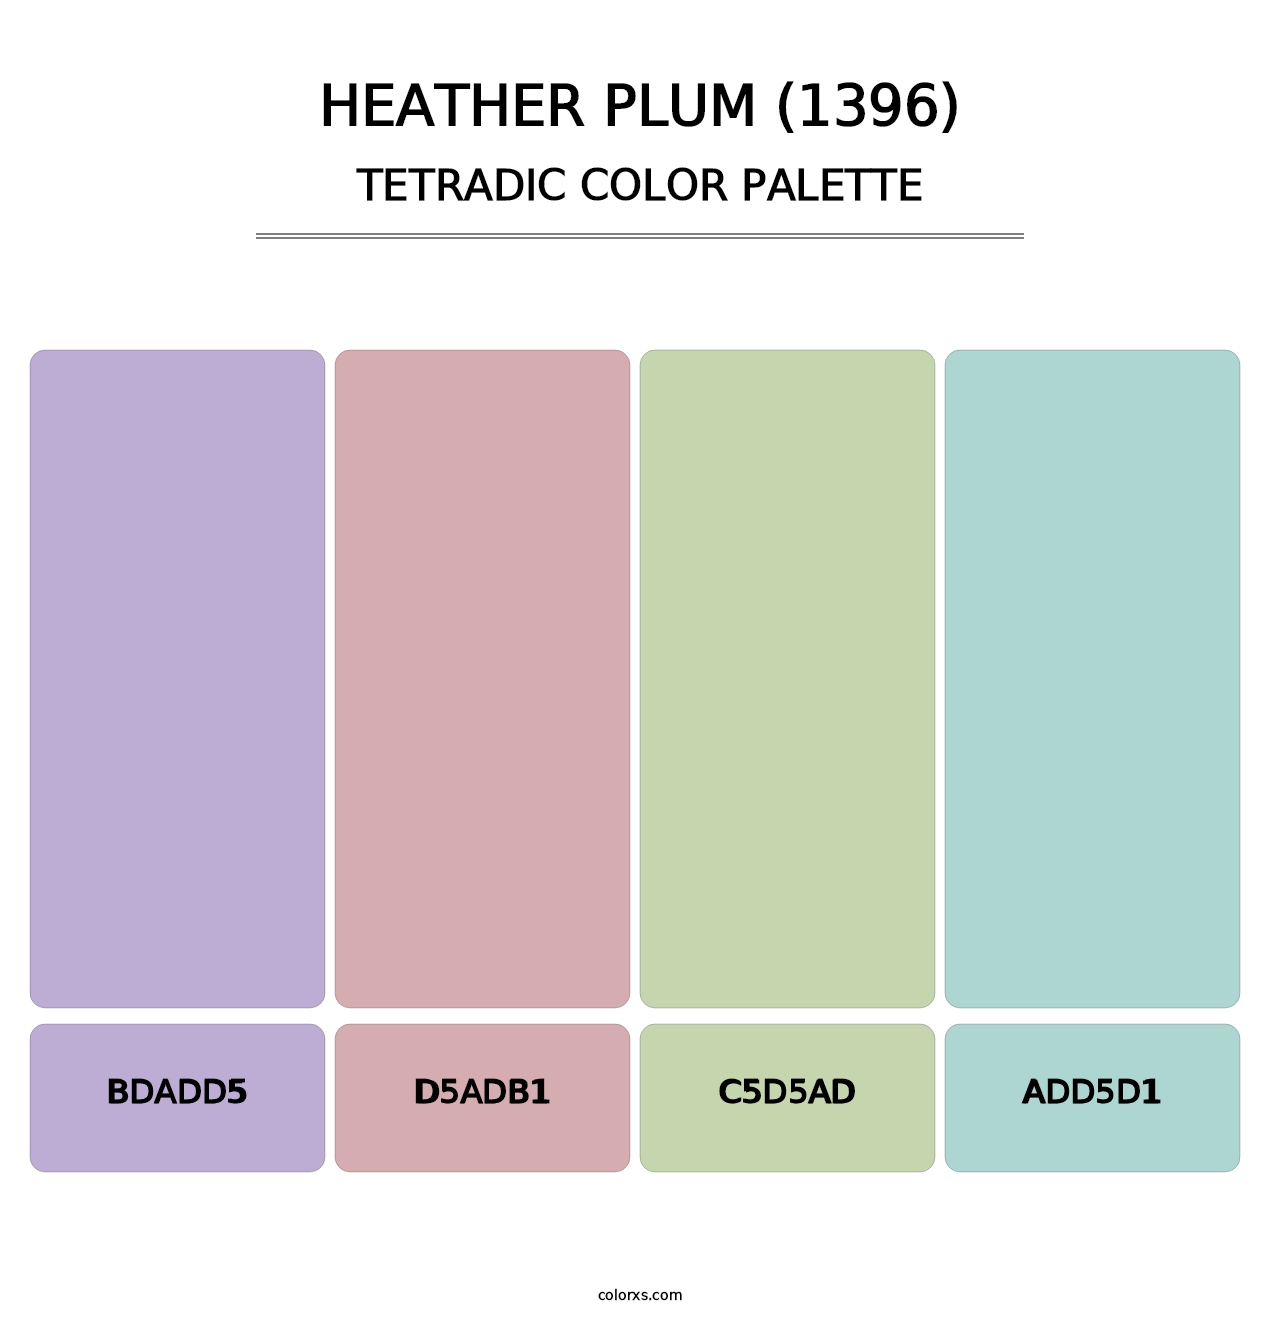 Heather Plum (1396) - Tetradic Color Palette